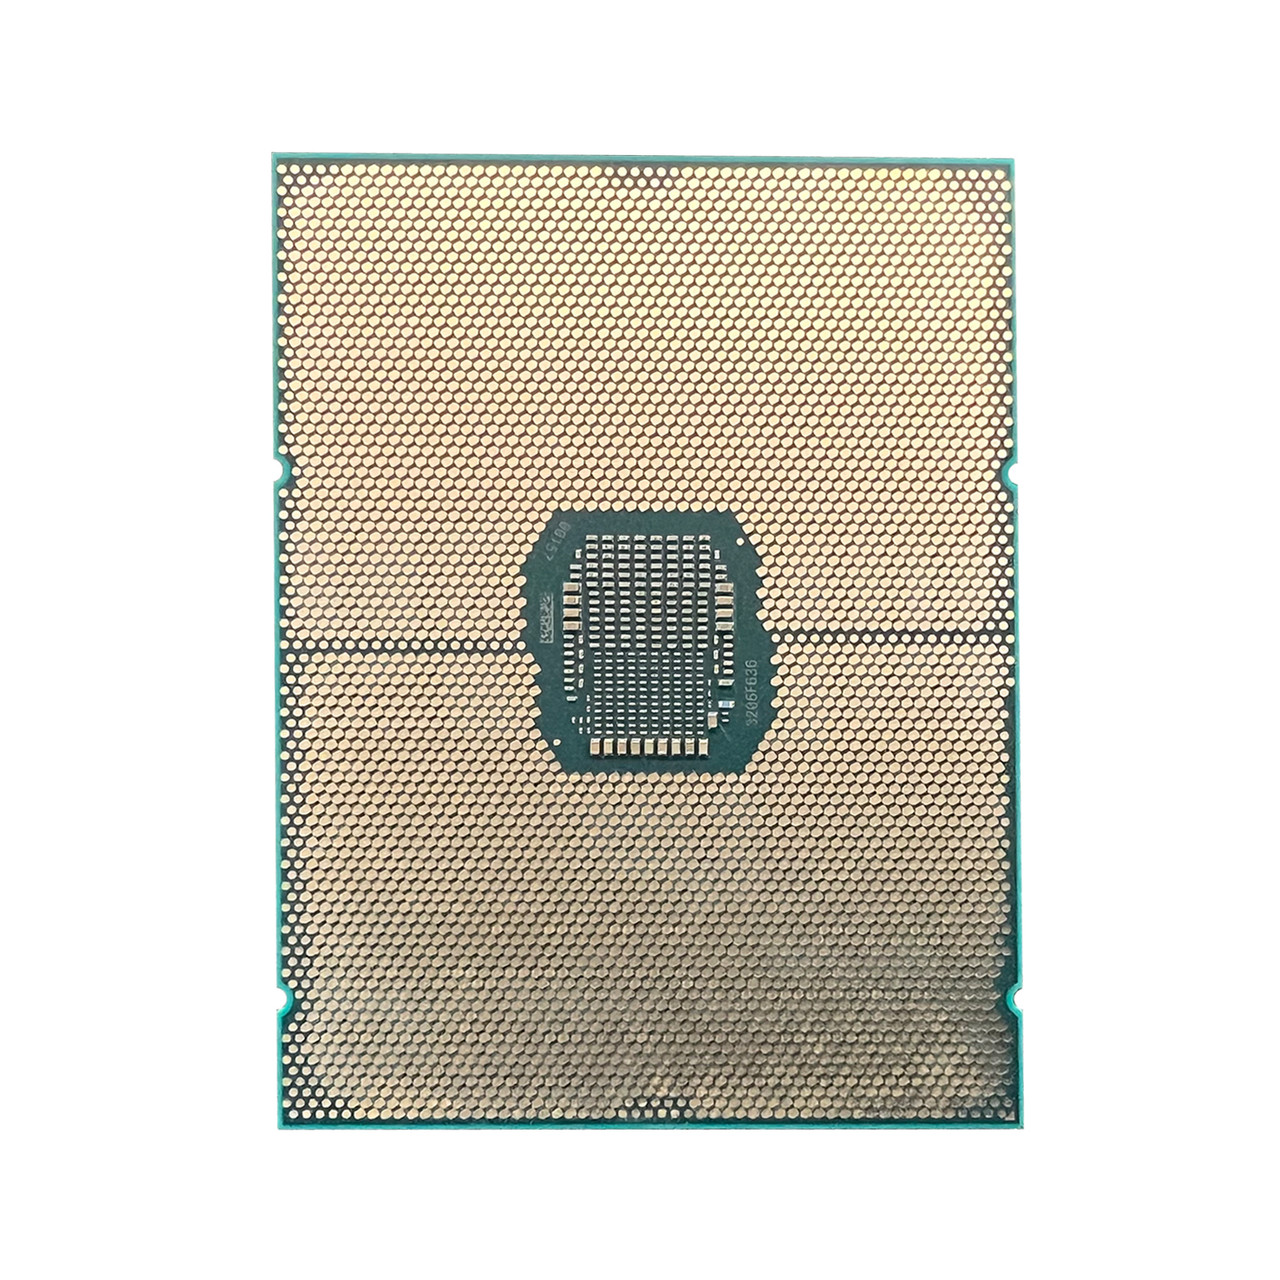 Intel SRKY2 Xeon Gold 6338N 32C 2.20Ghz 48MB Processor